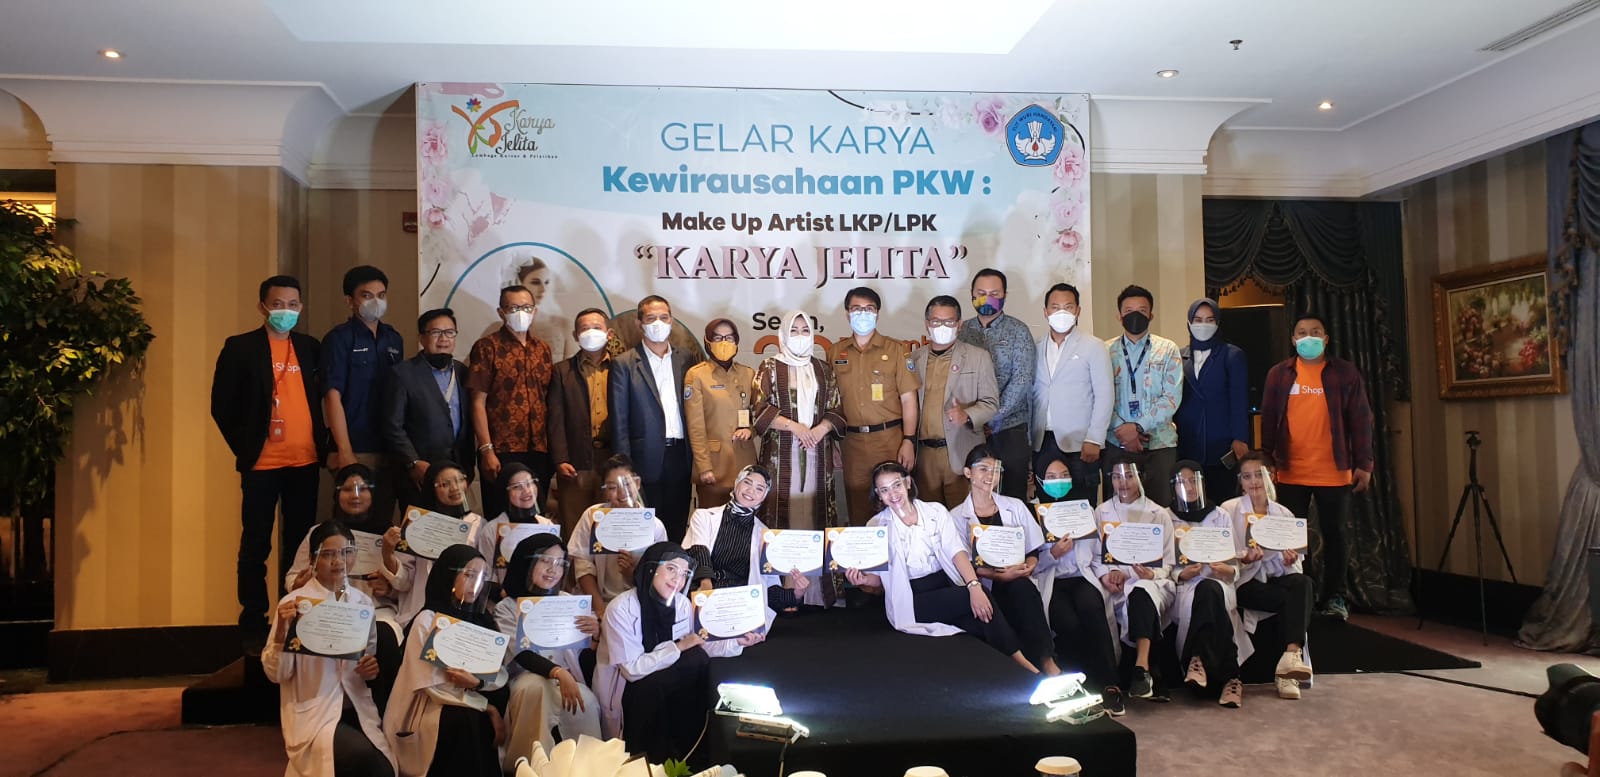 Ketua Kadin Bandung Apresiasi Gelar Karya Sekeligus Penutupan Program PKW 2021 serta Menyambut Hari Ibu